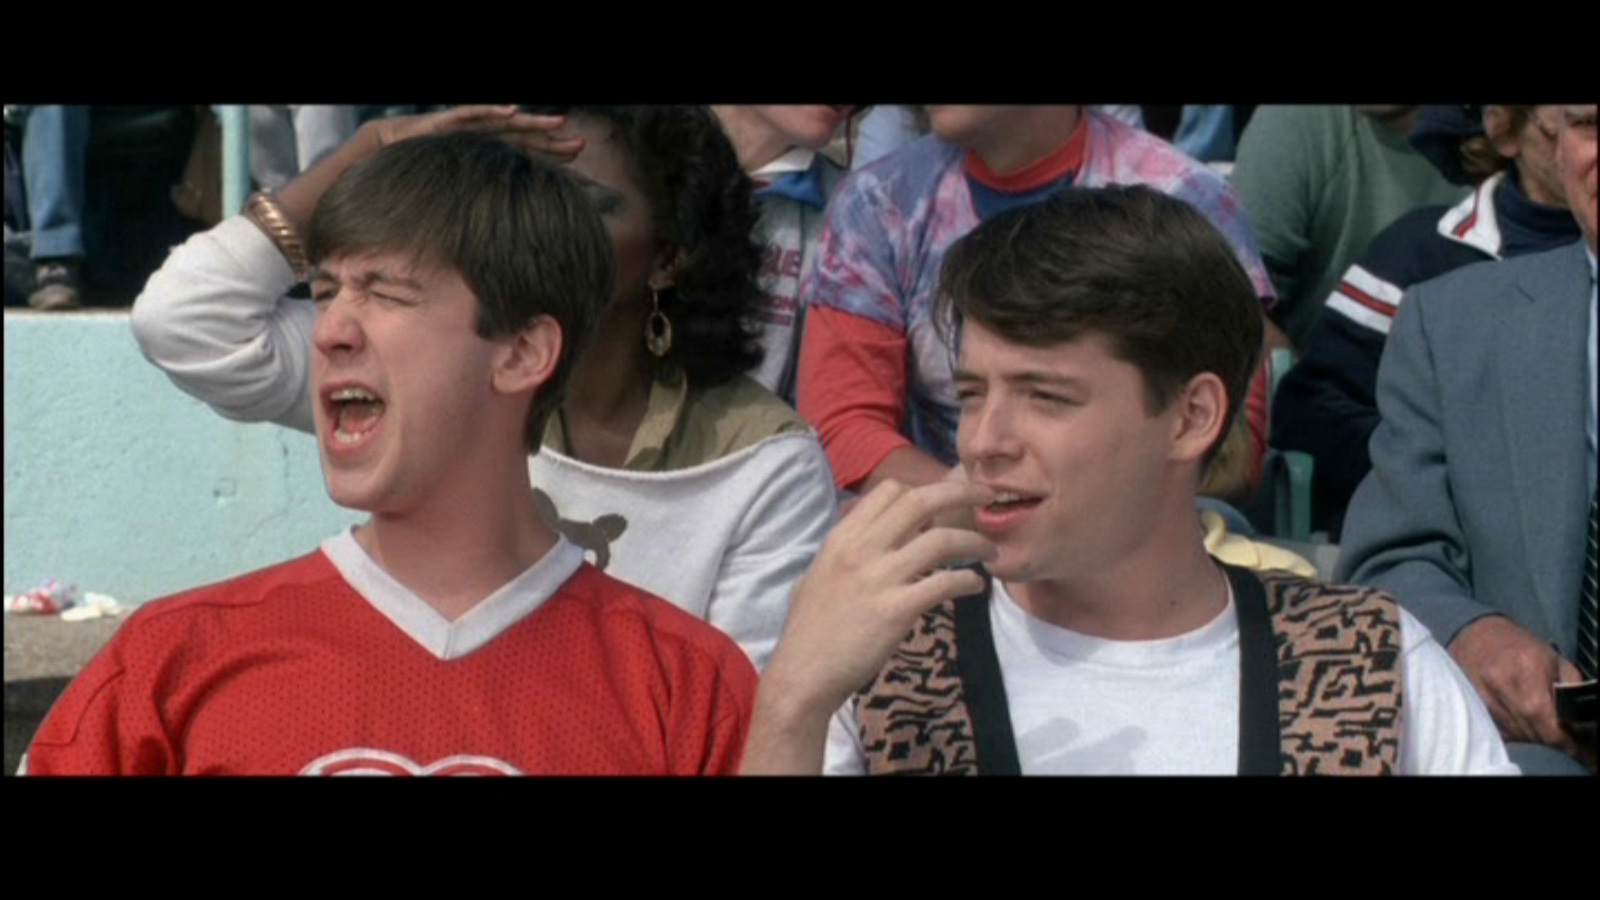 Ferris Bueller's Day Off - Ferris Bueller Image (2541009) - Fanpop